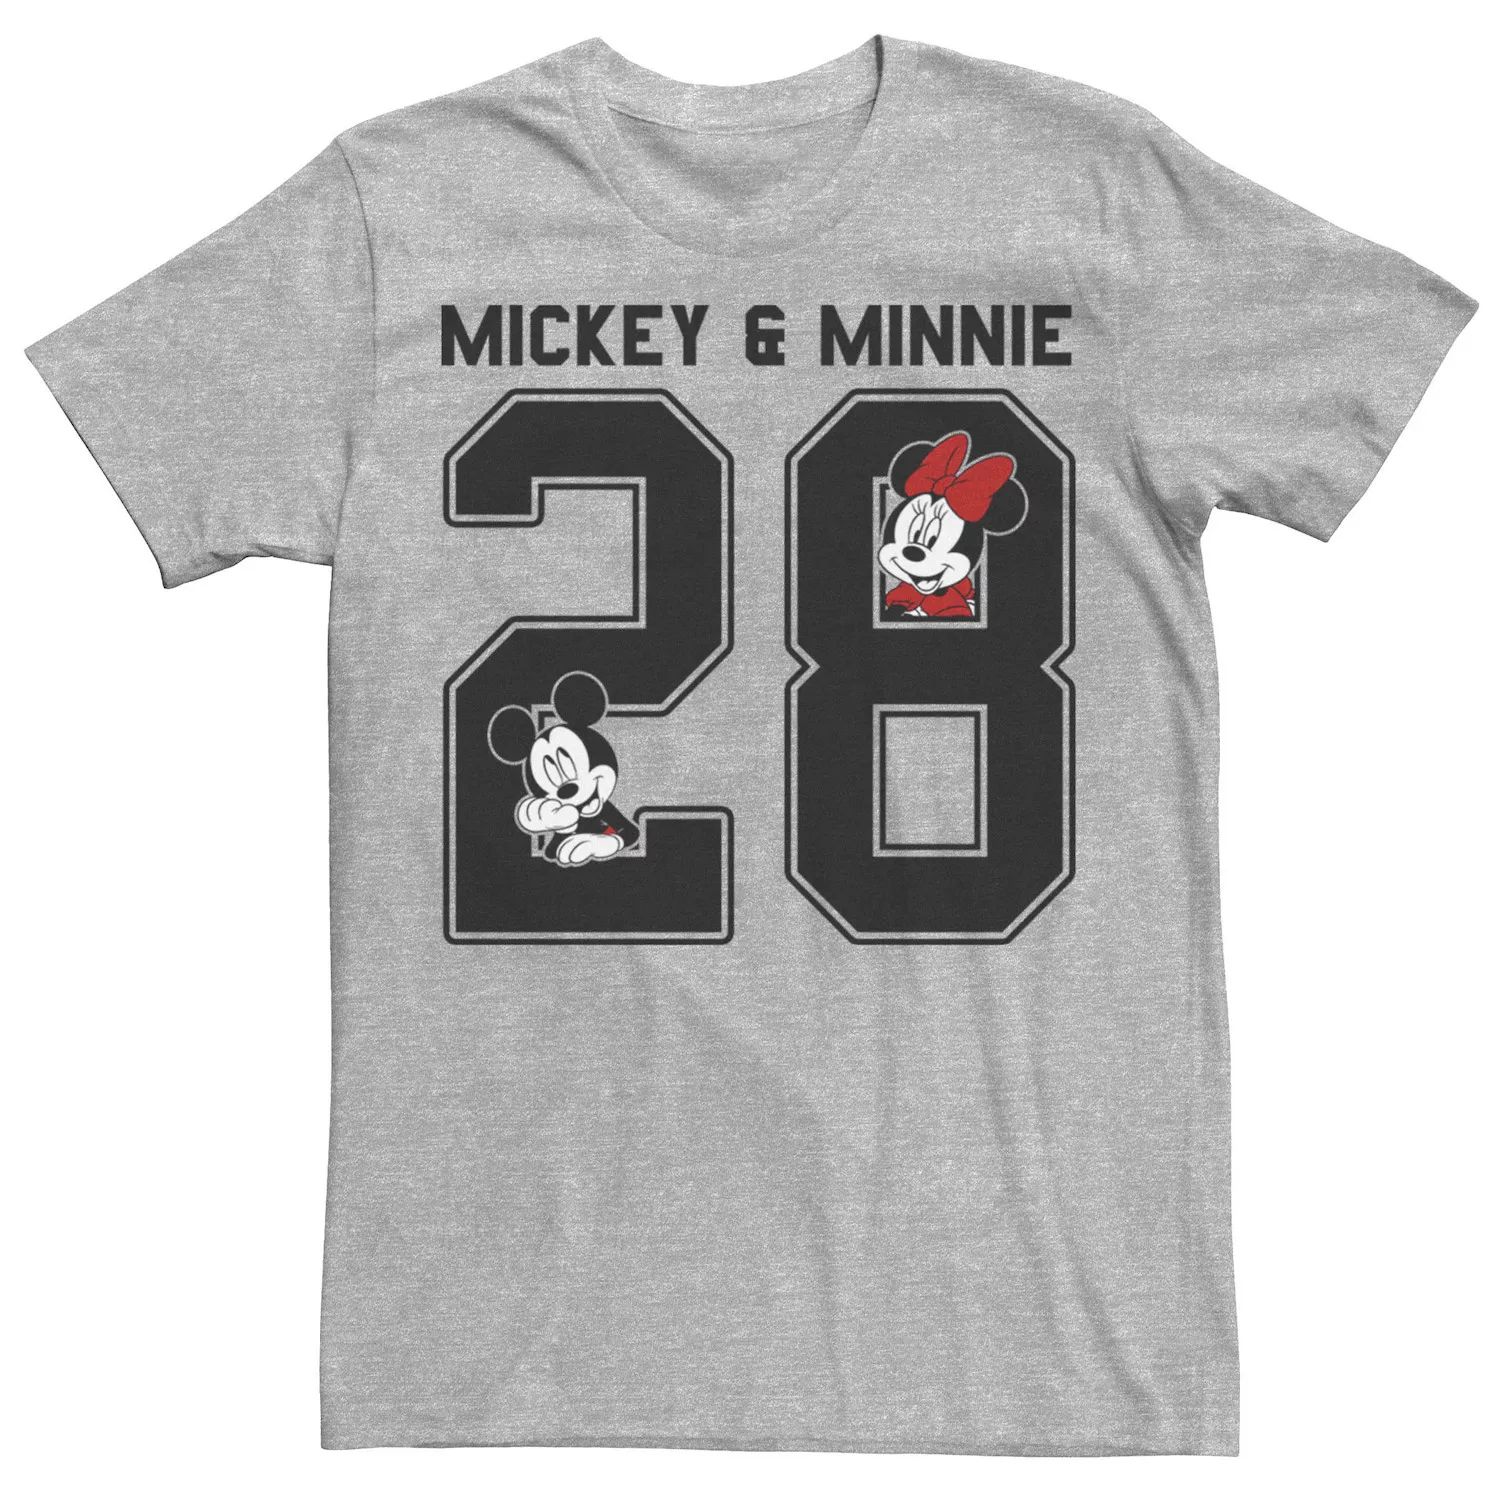 Мужская университетская трикотажная футболка с Микки Минни Disney